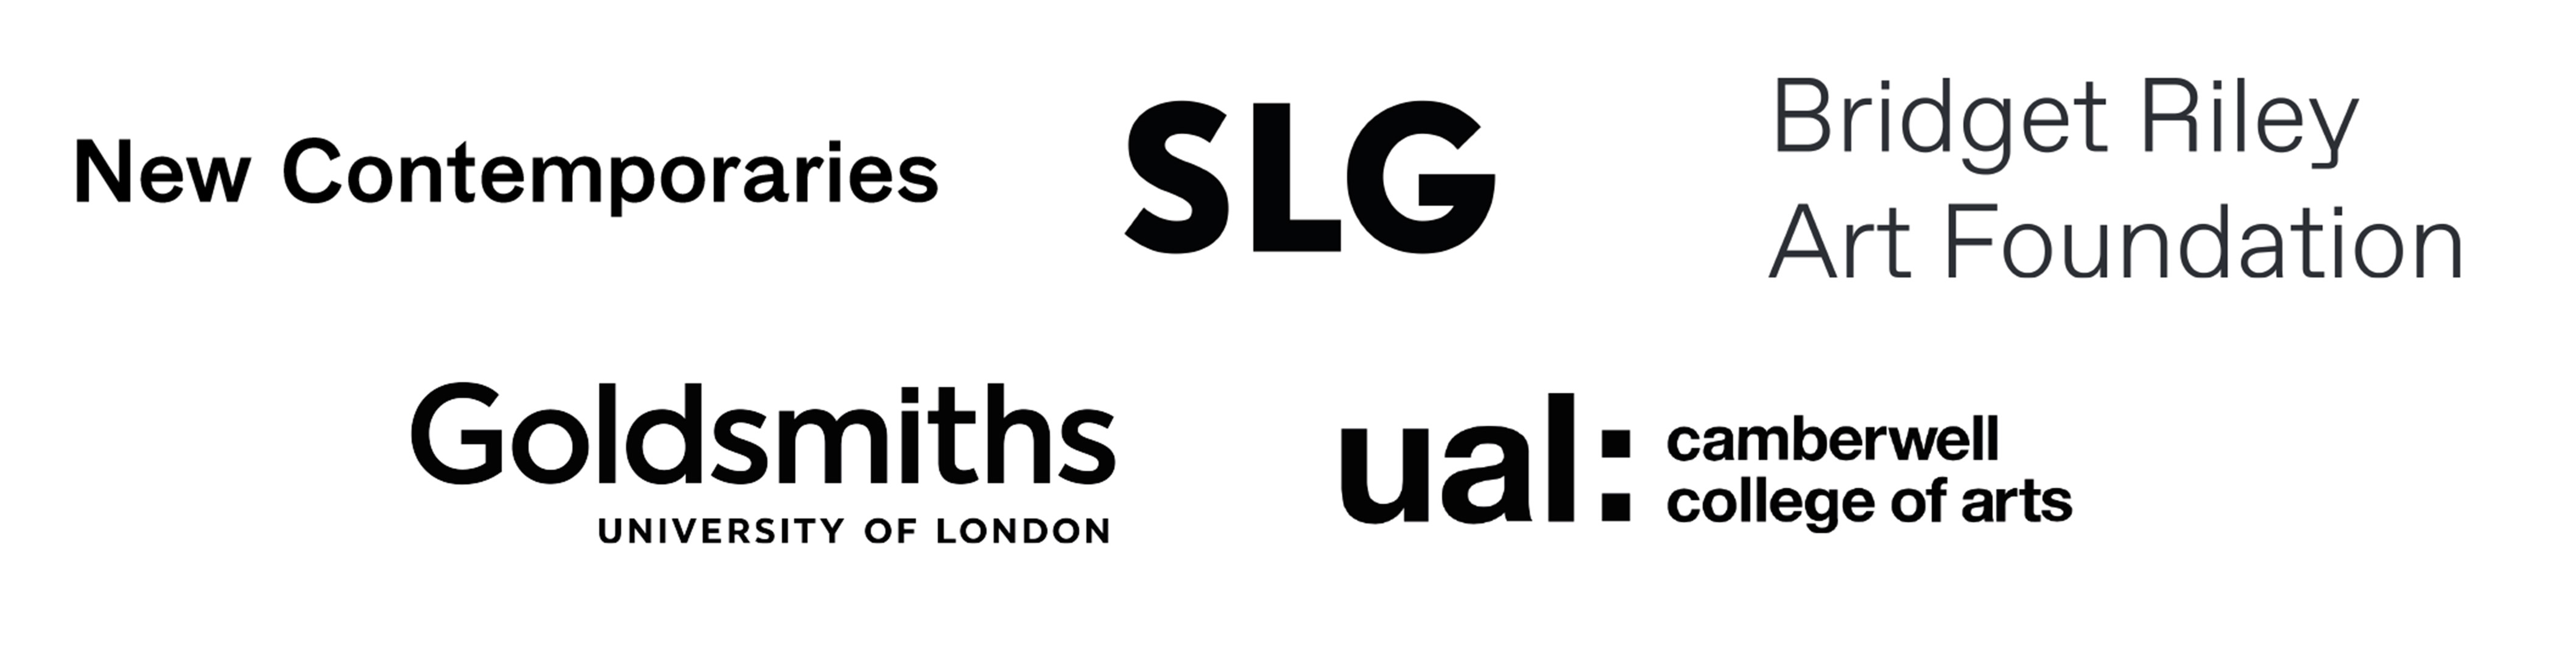 New Contemporaries, SLG, Bridget Riley Art Foundation, Goldsmiths, UAL logos